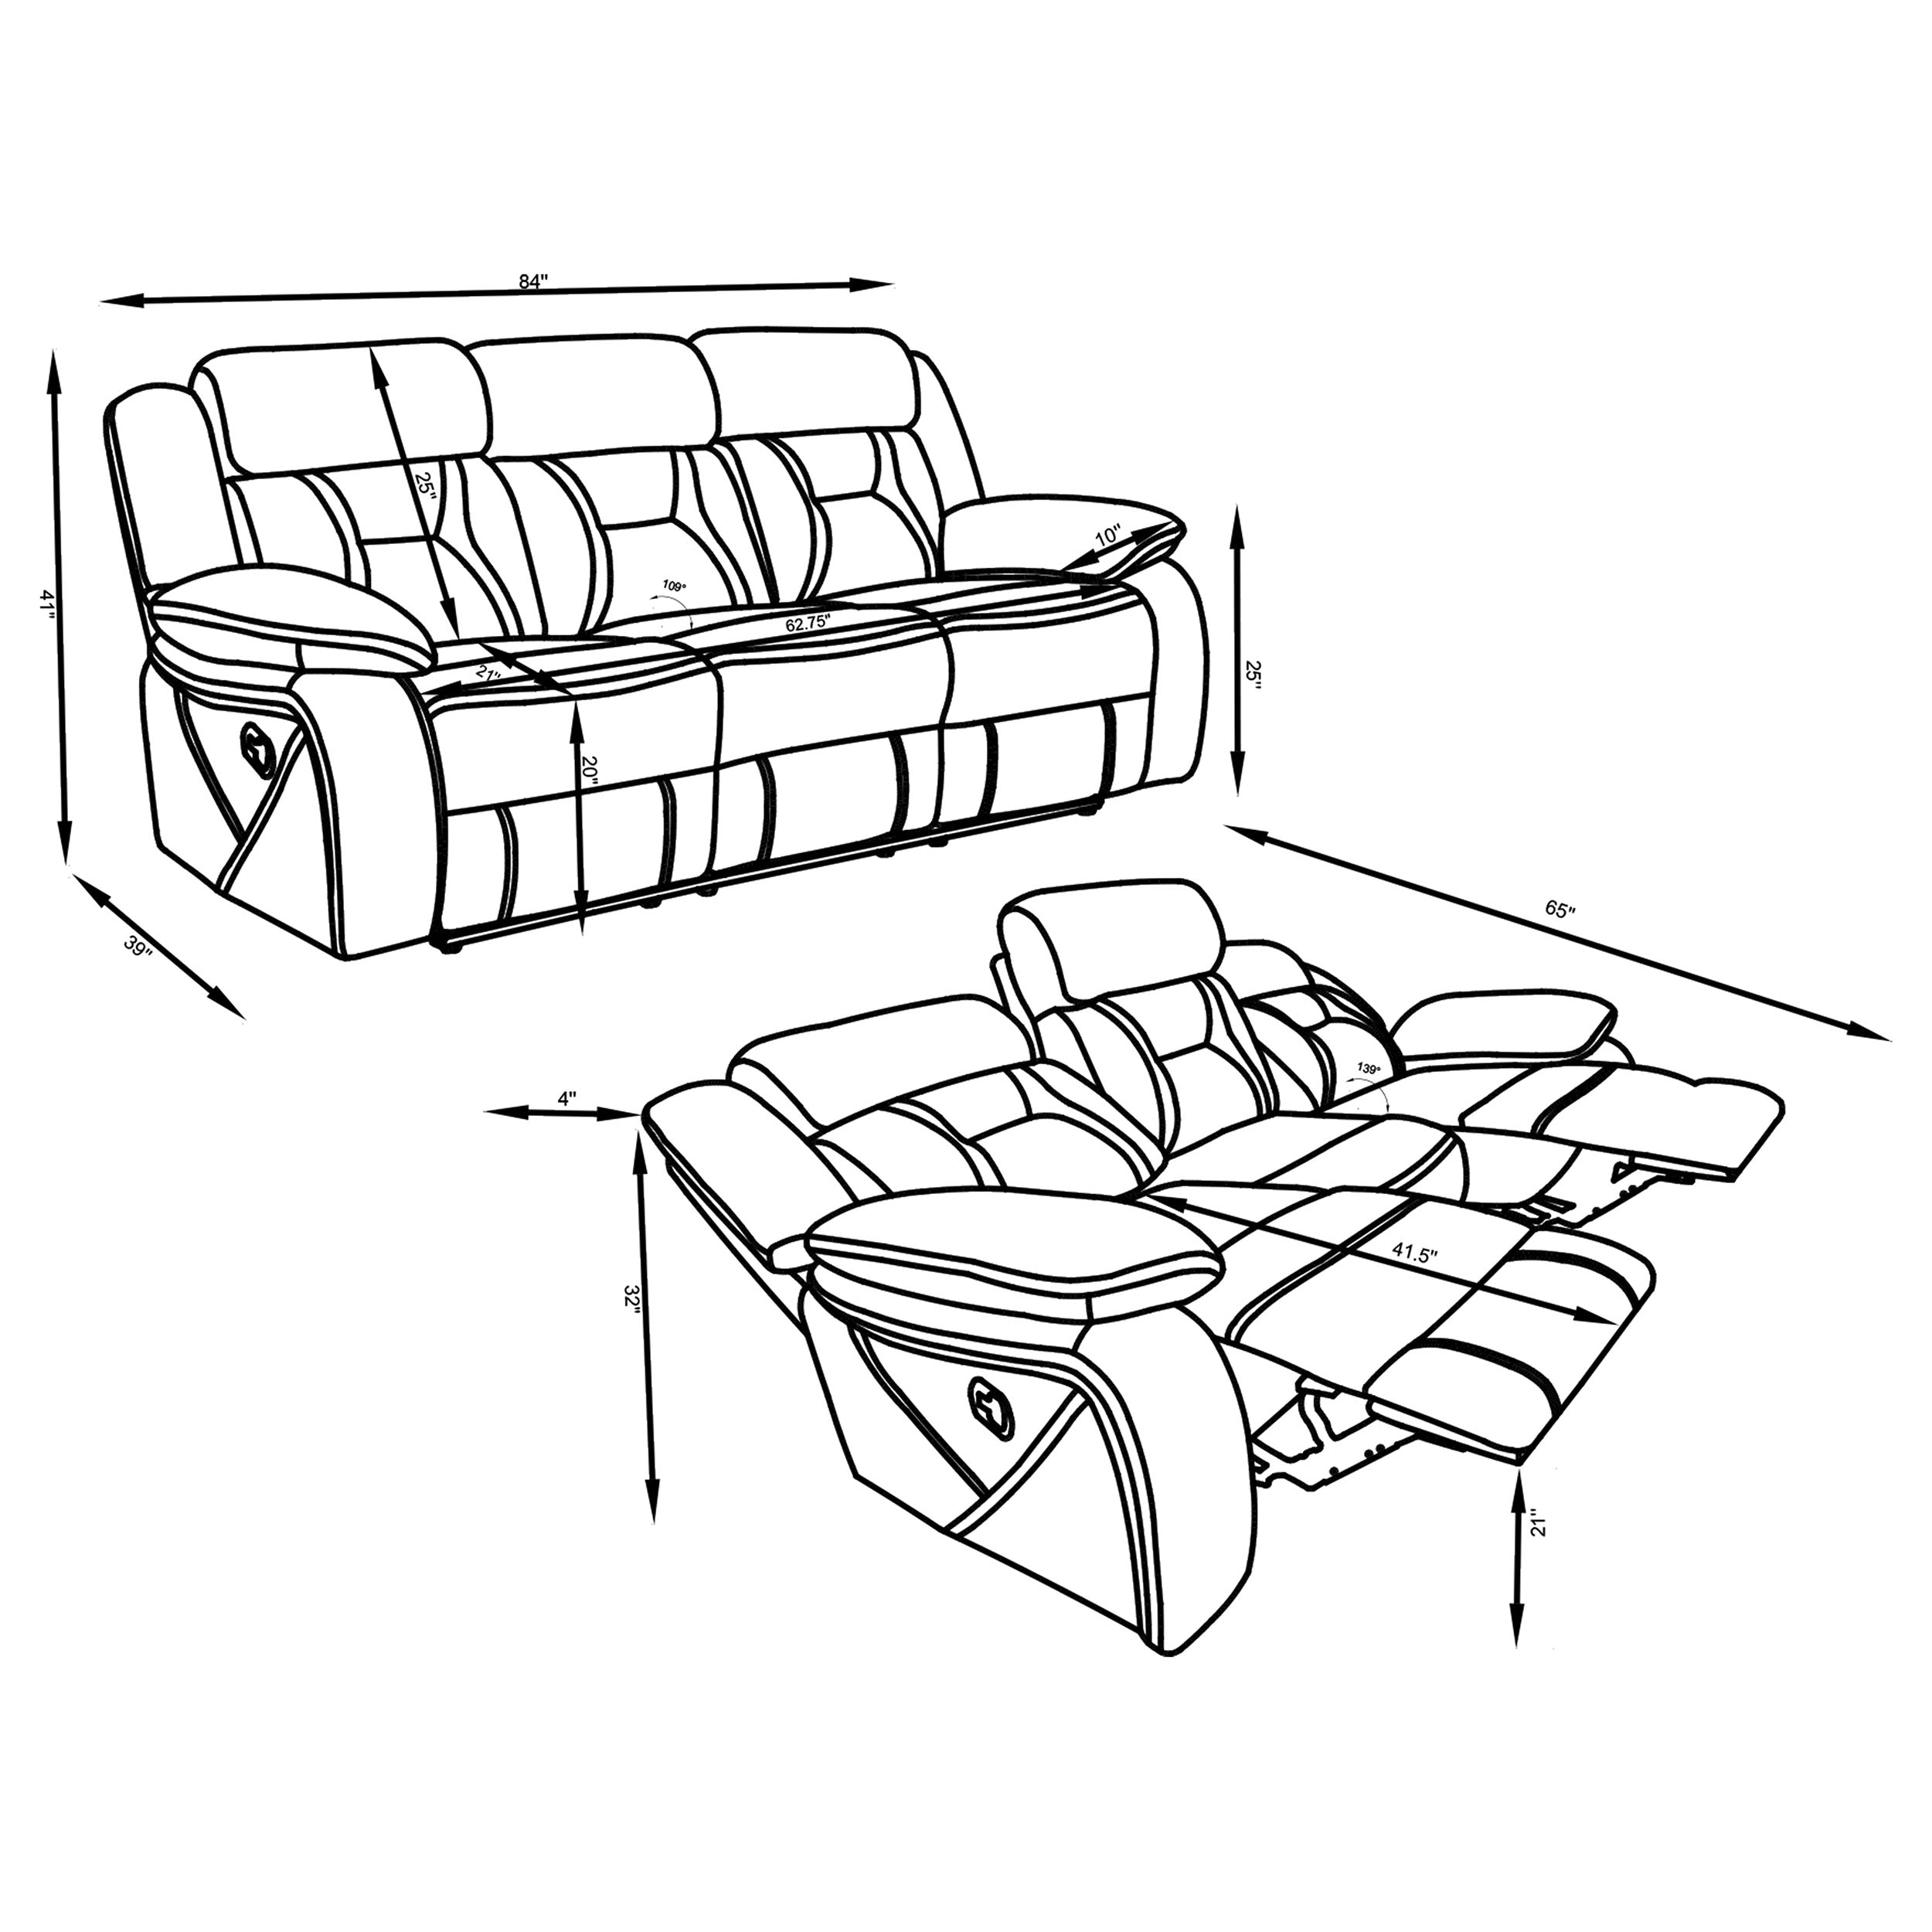 Jamhal Upholstered Tufted Living Room Set Motion Sofa Grey